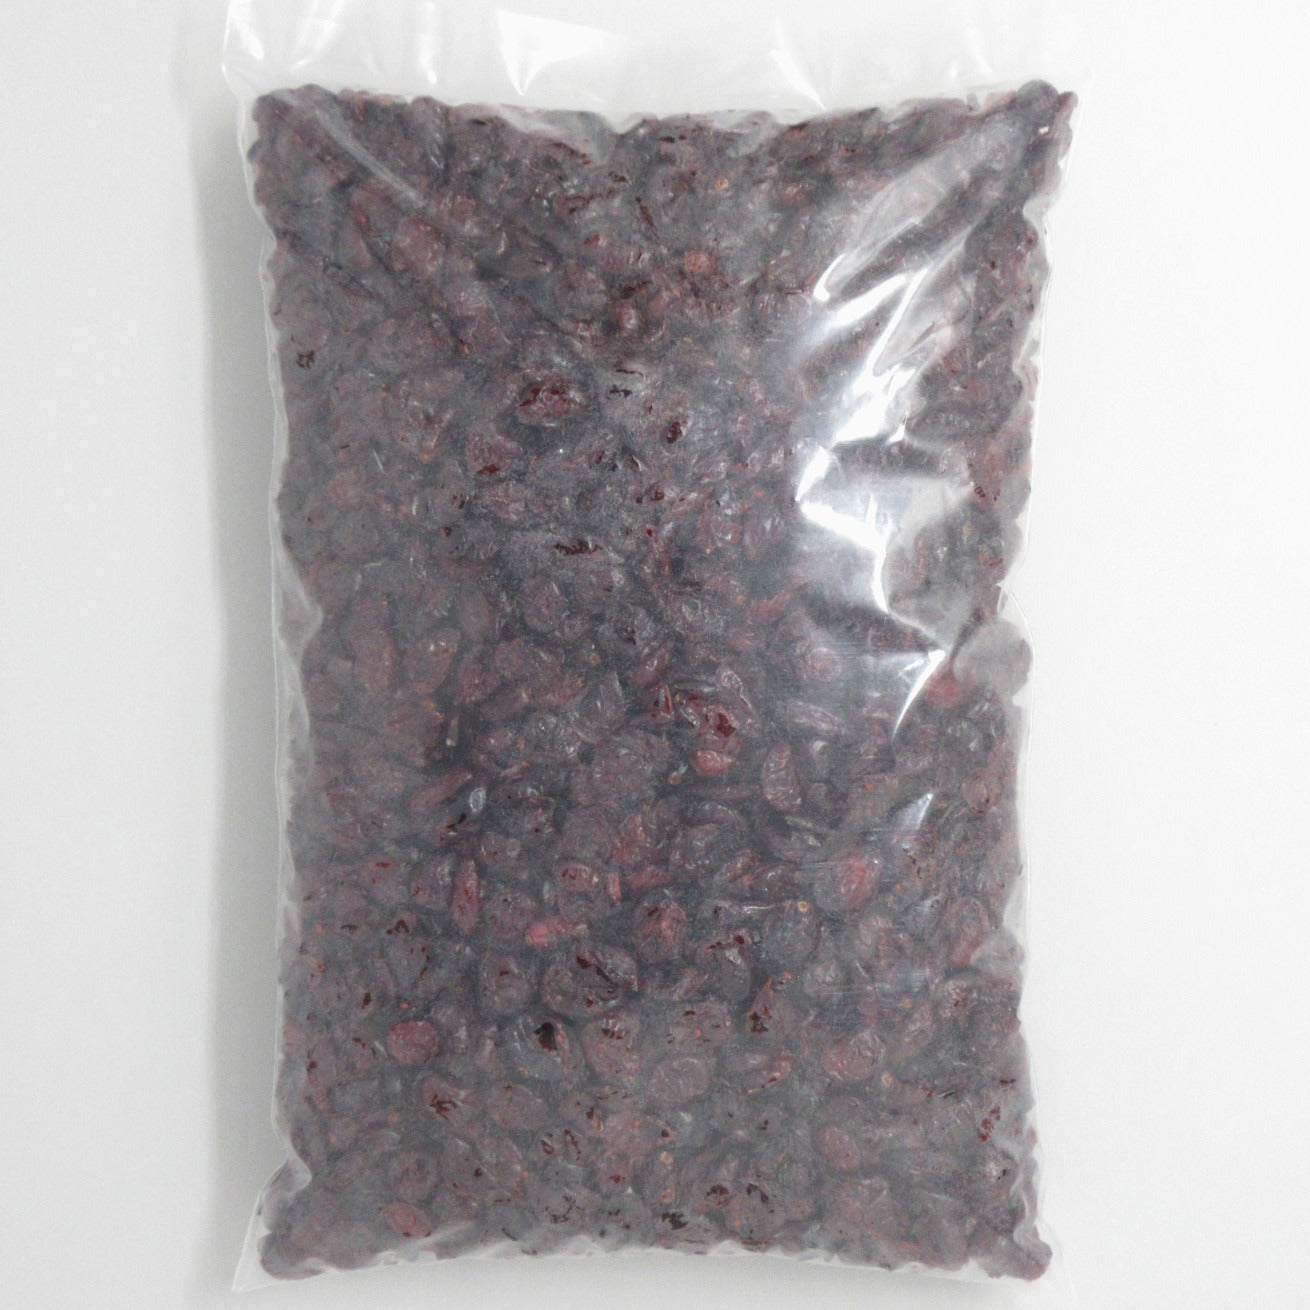 Flour Barrel product image - Dried Cranberries